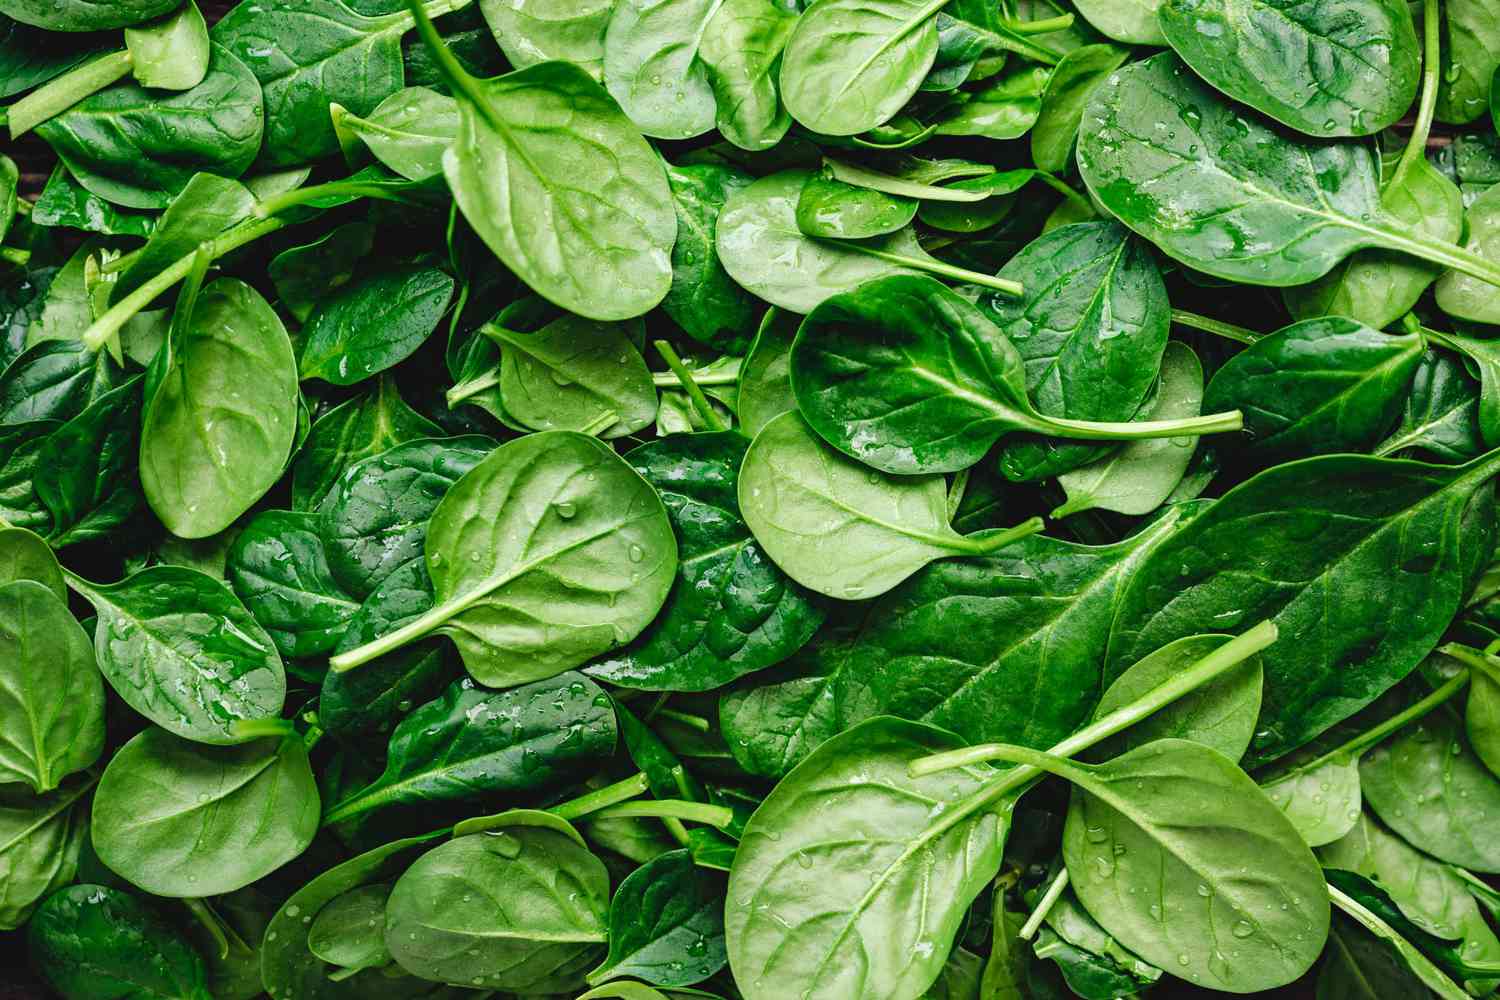 Mélange Green Superfood | Avantages, Dosage Et Mode D’Emploi